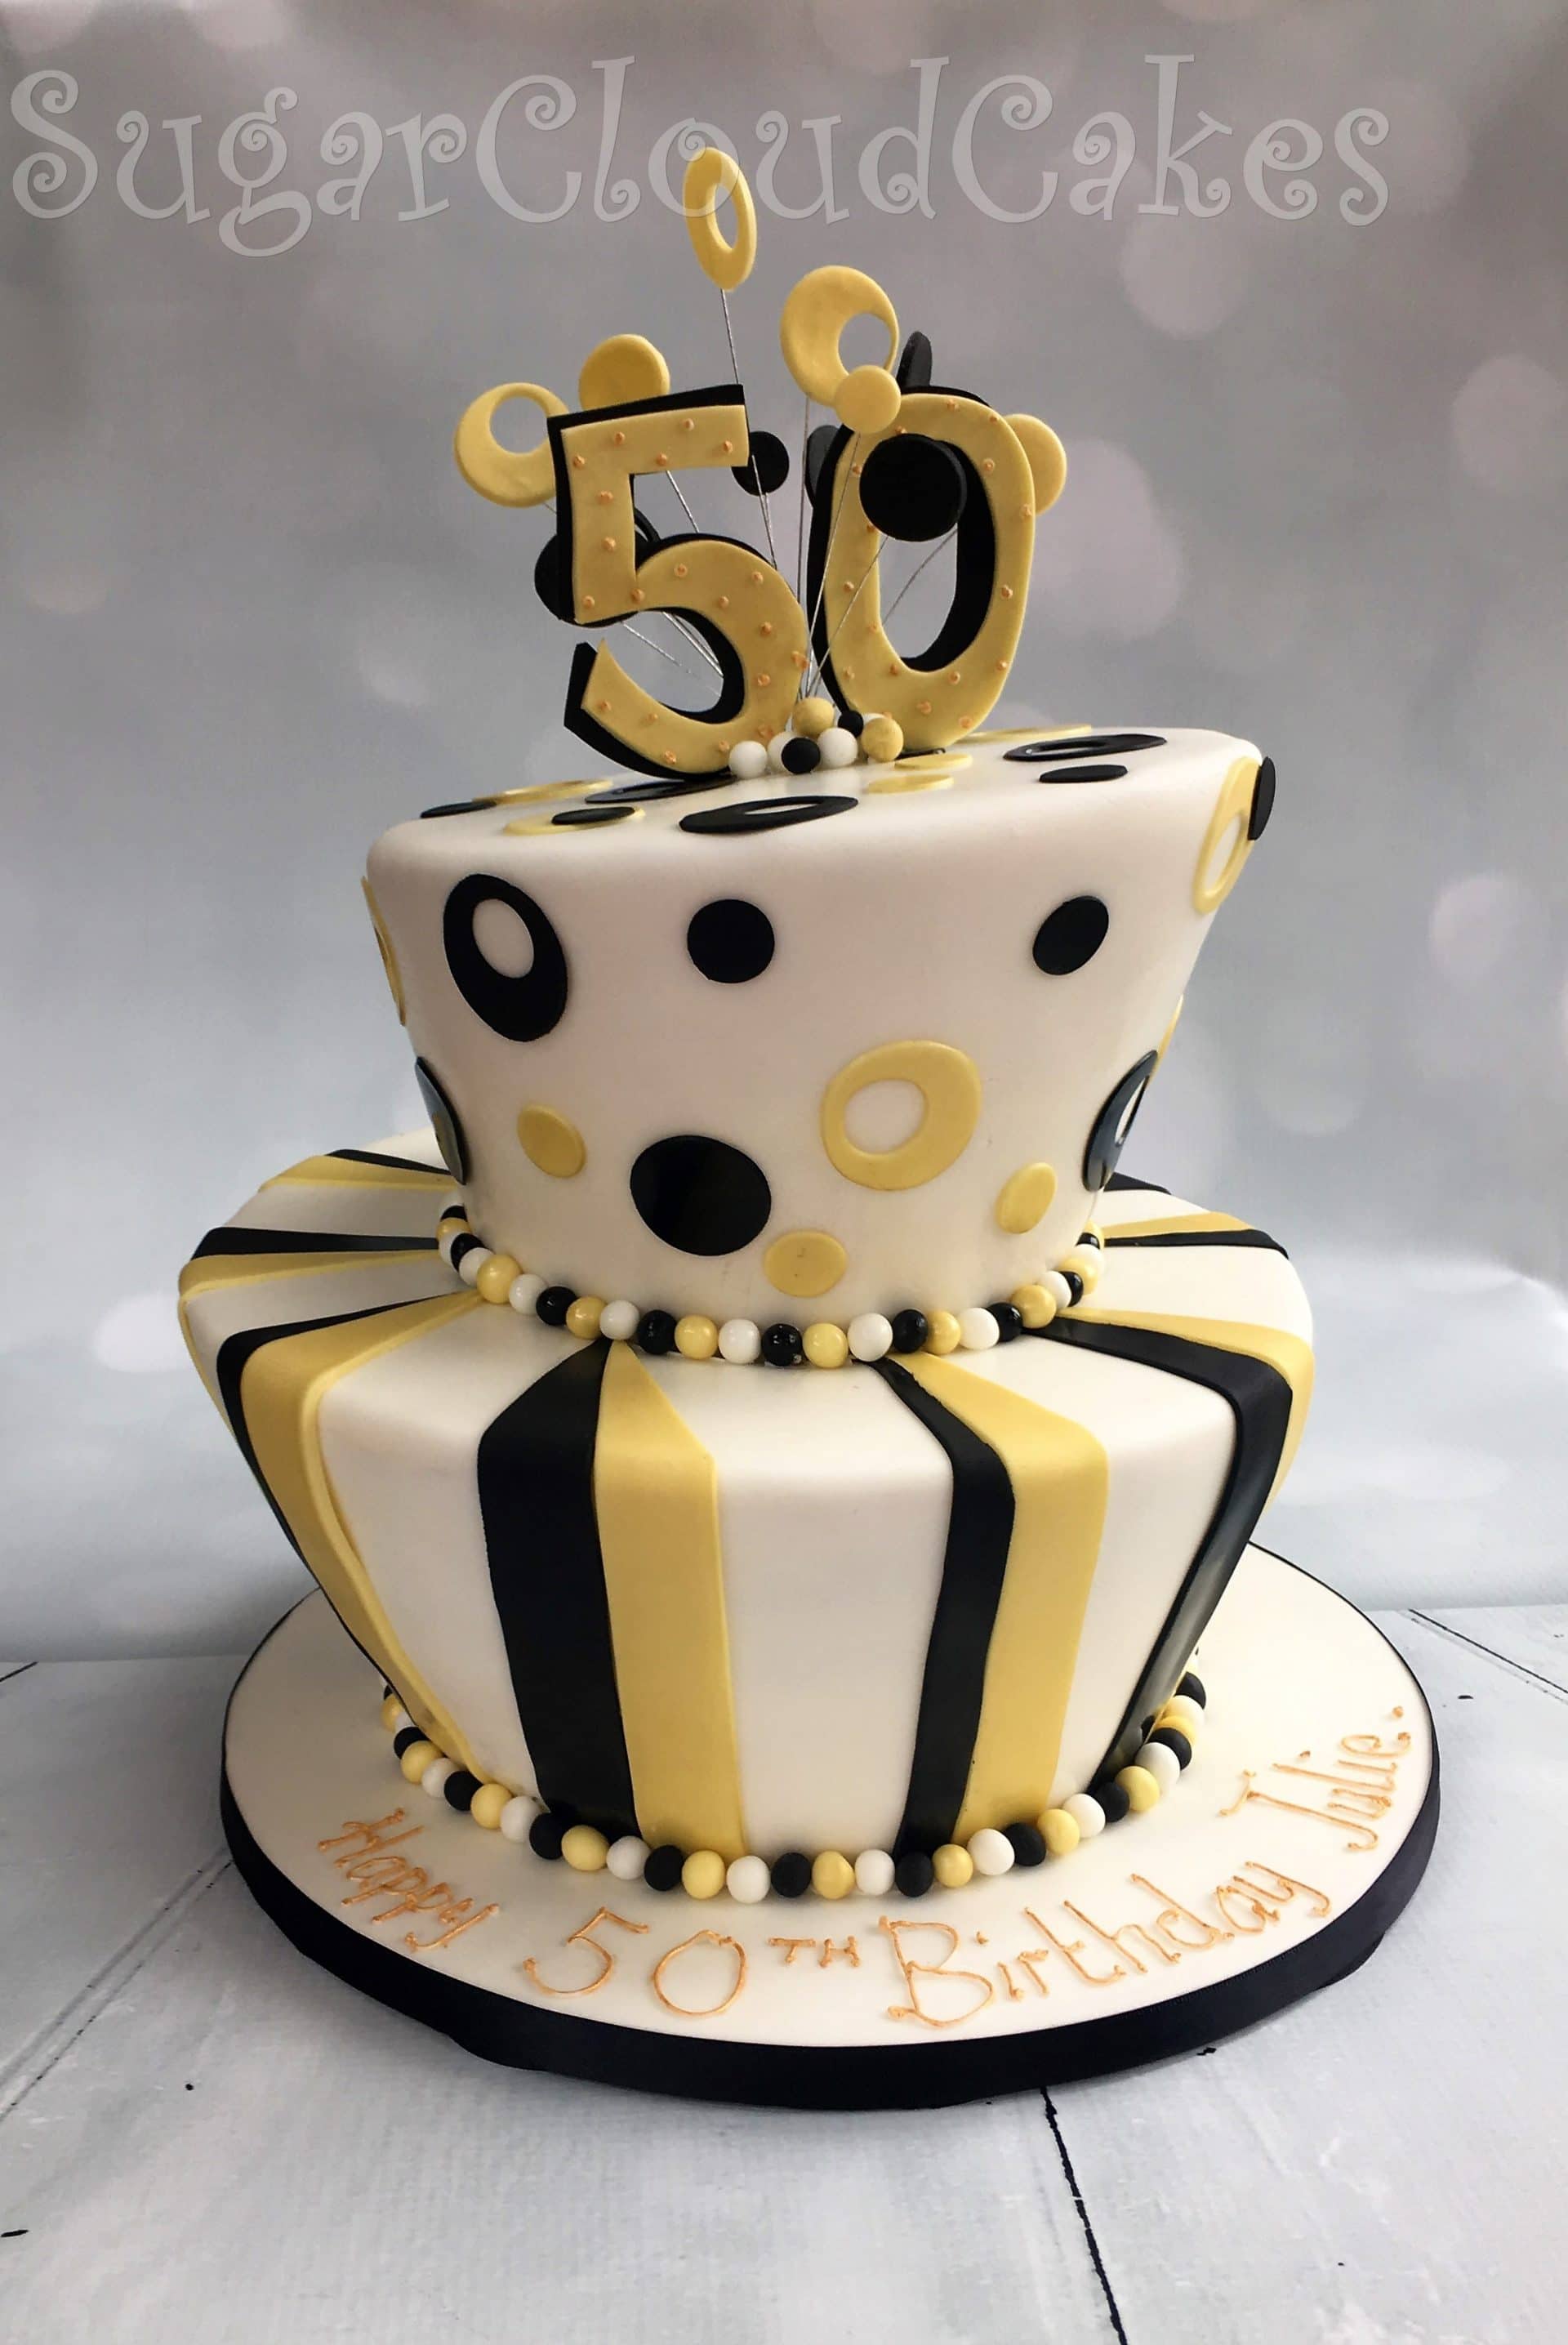 Sugar Cloud Cakes Cake Designer Nantwich Crewe Cheshire 50th Birthday Celebration Cake